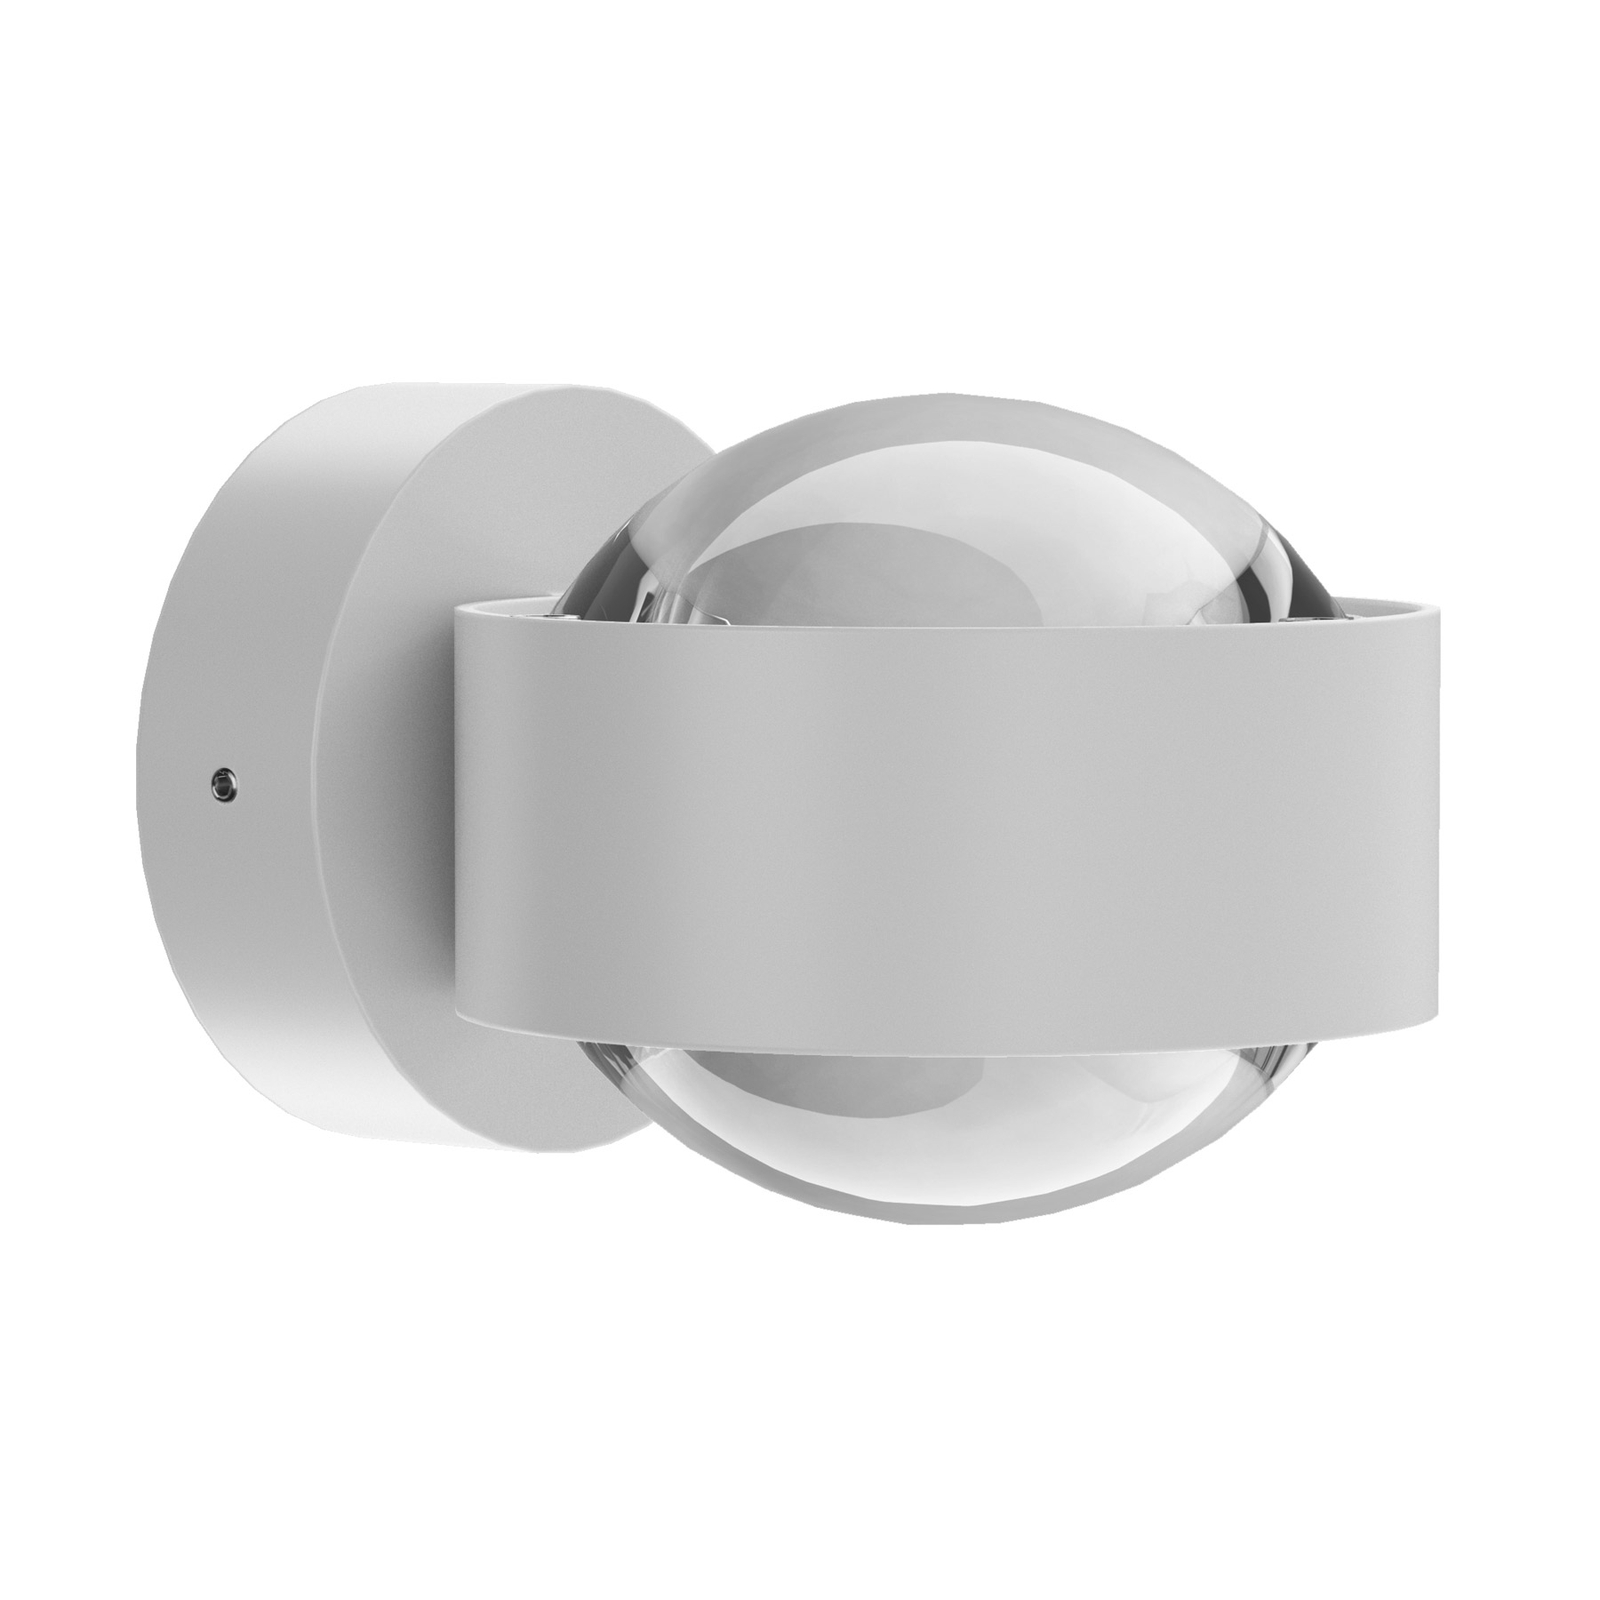 Puk Mini Wall LED 2x8W lentes transparente, blanco mate